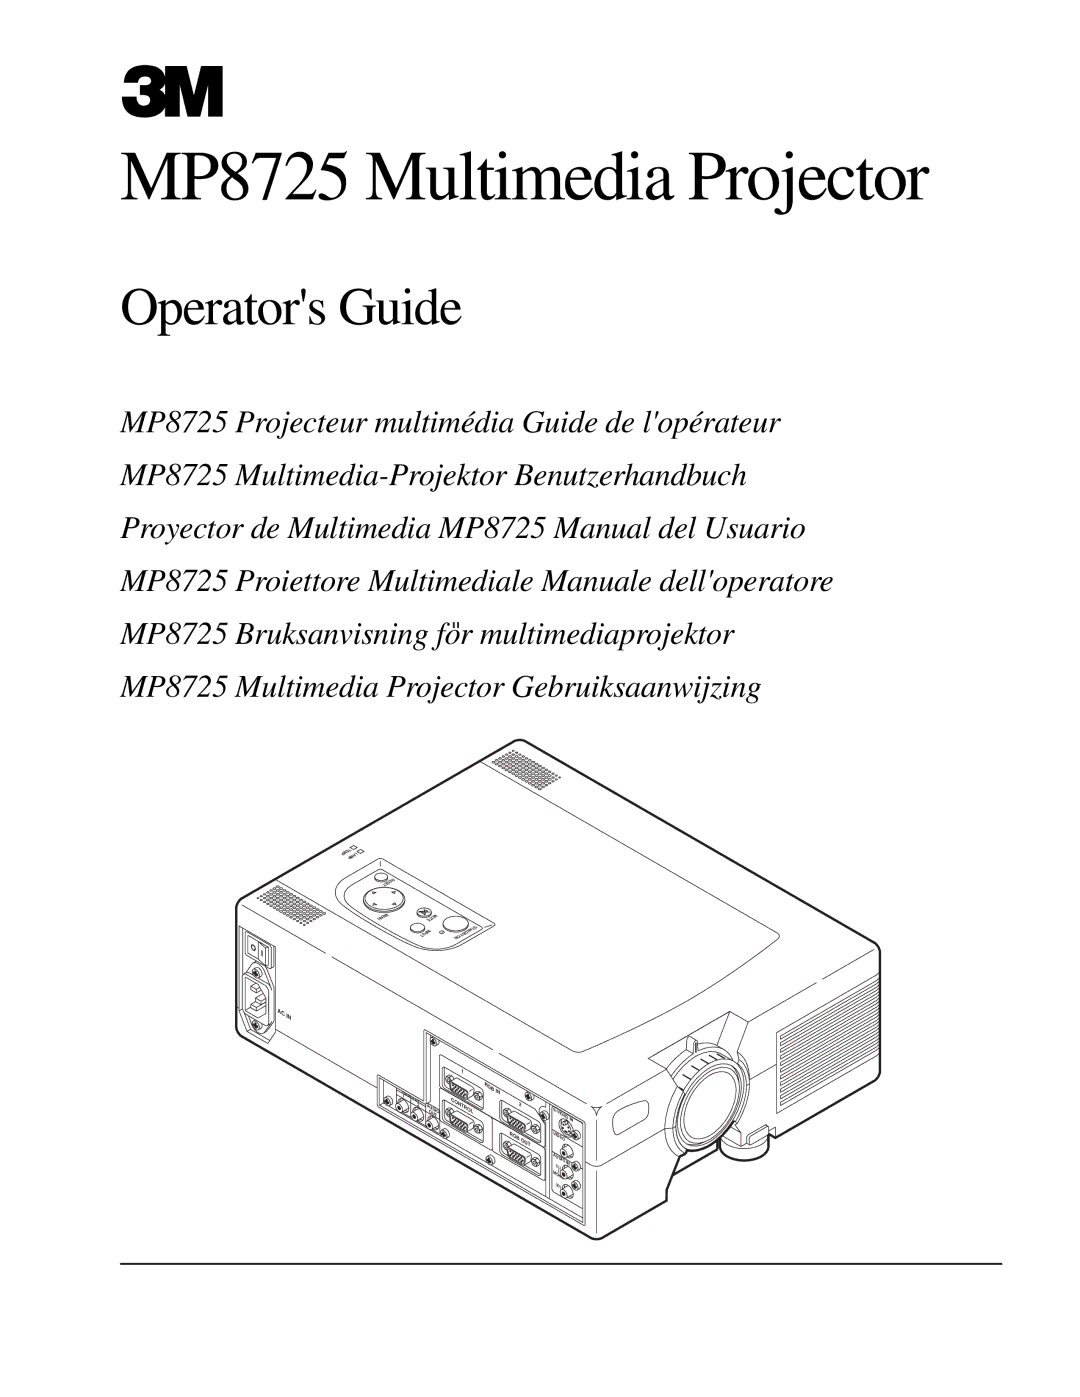 3M manual MP8725 Multimedia Projector 